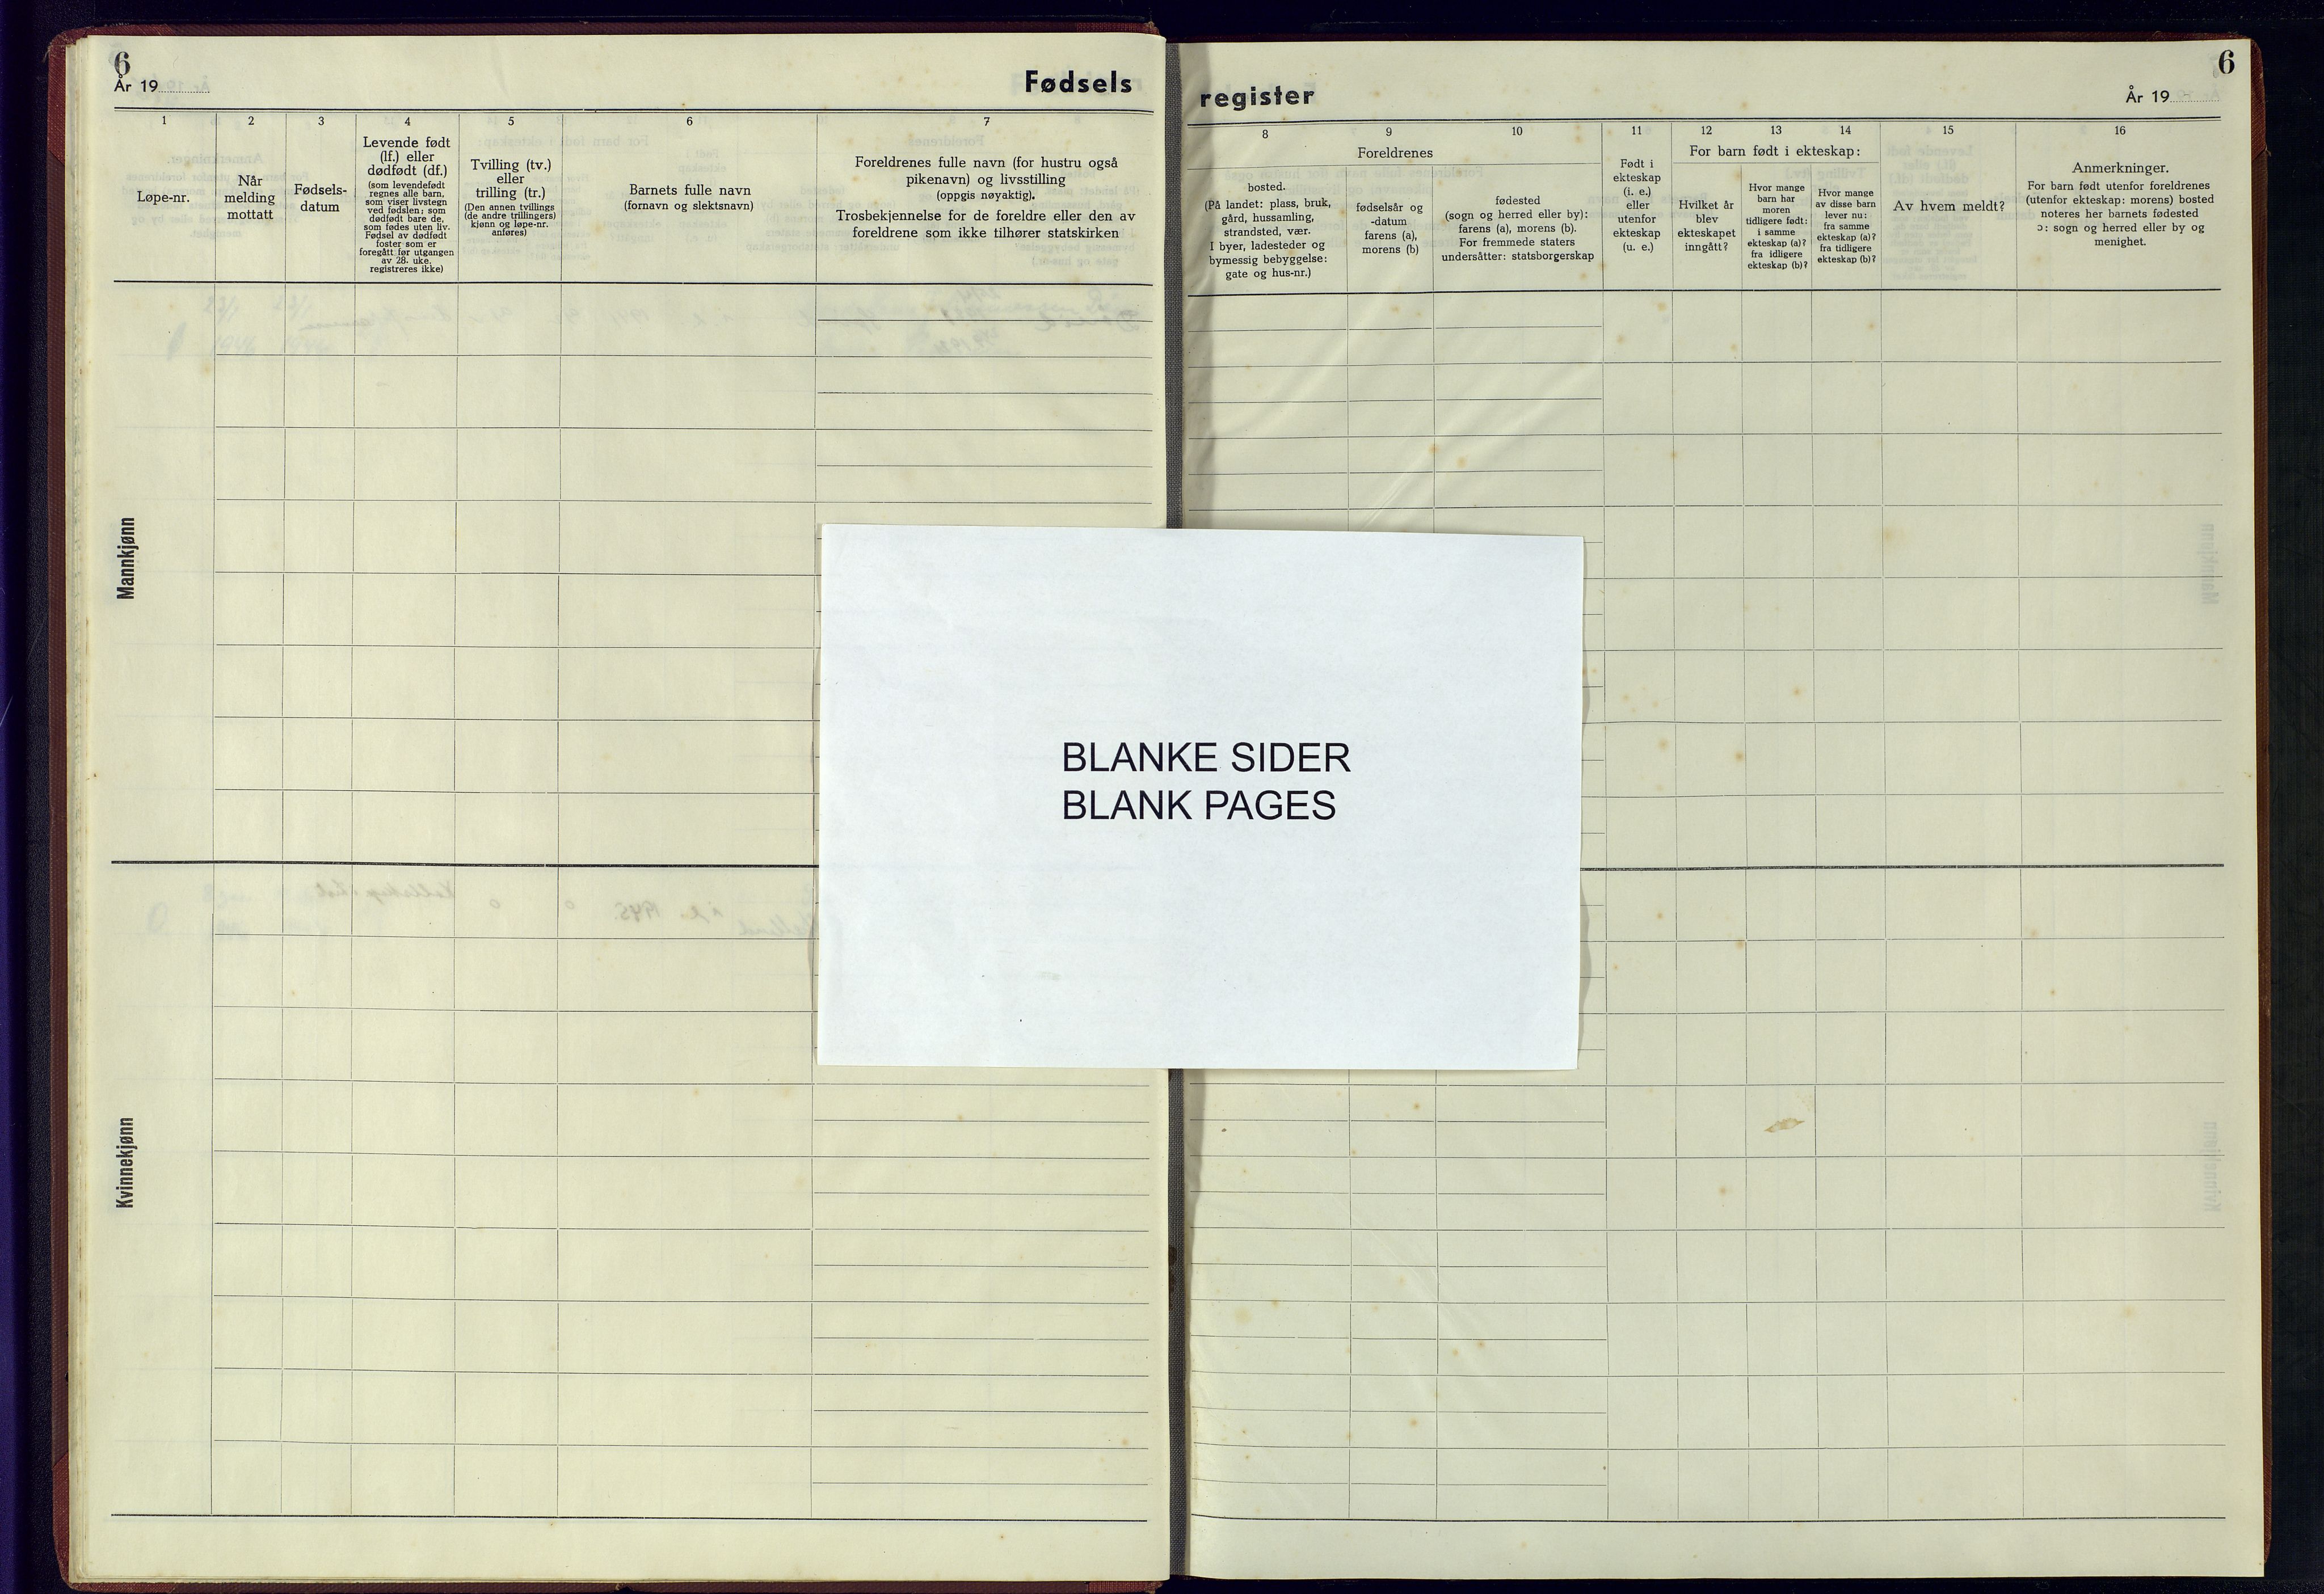 Herad sokneprestkontor, SAK/1111-0018/J/Jb/L0002: Birth register no. A-VI-3, 1942-1946